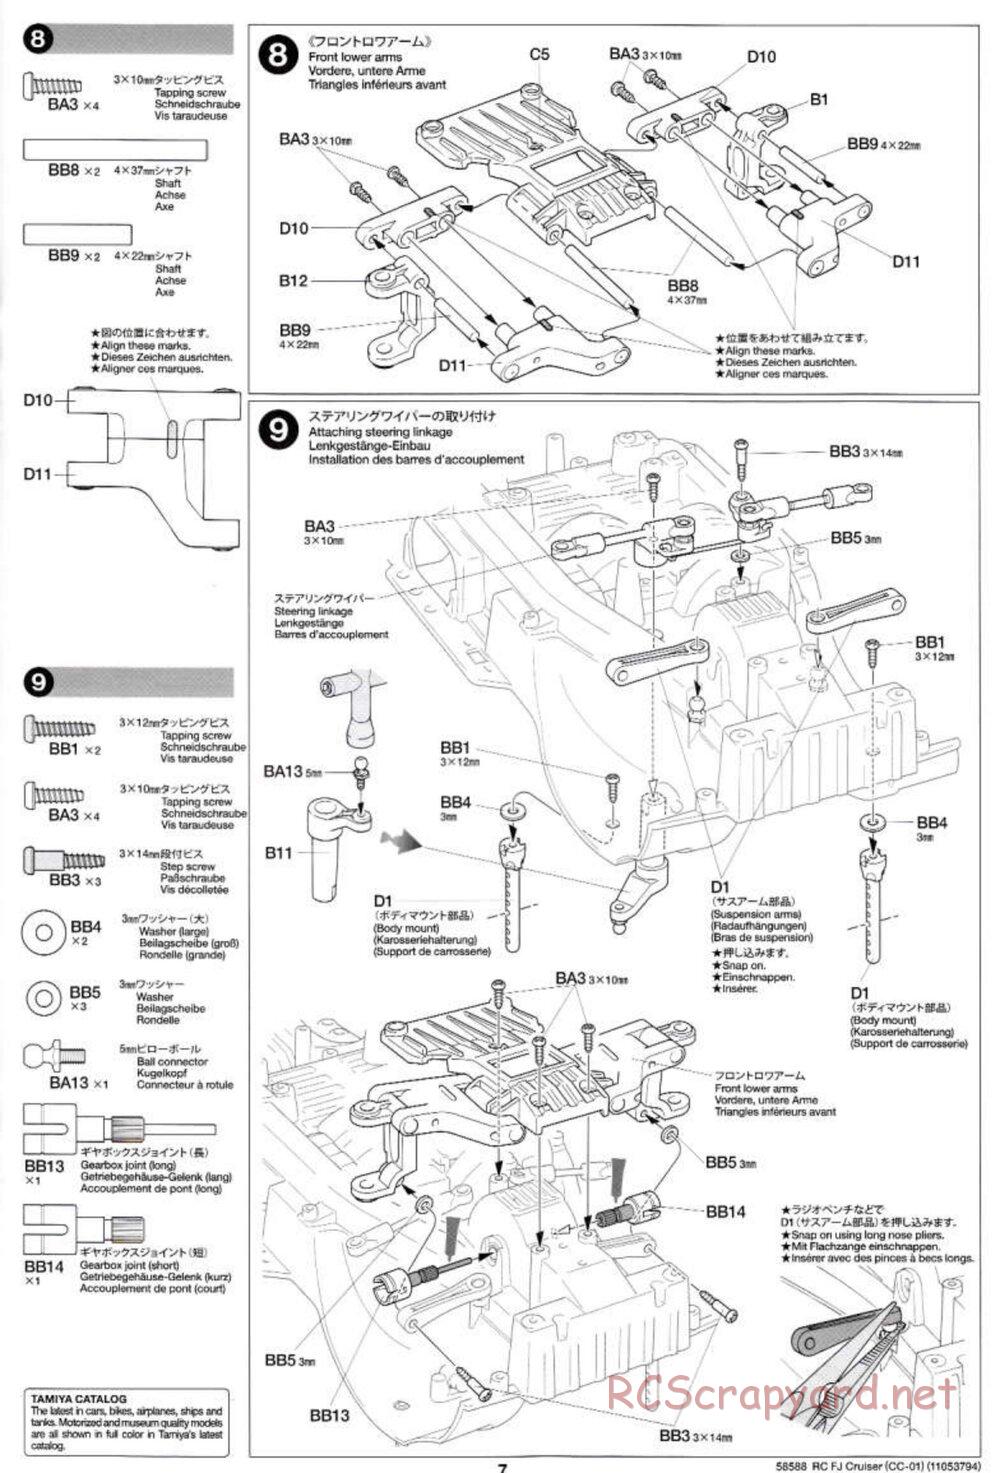 Tamiya - Toyota FJ Cruiser - CC-01 Chassis - Manual - Page 7